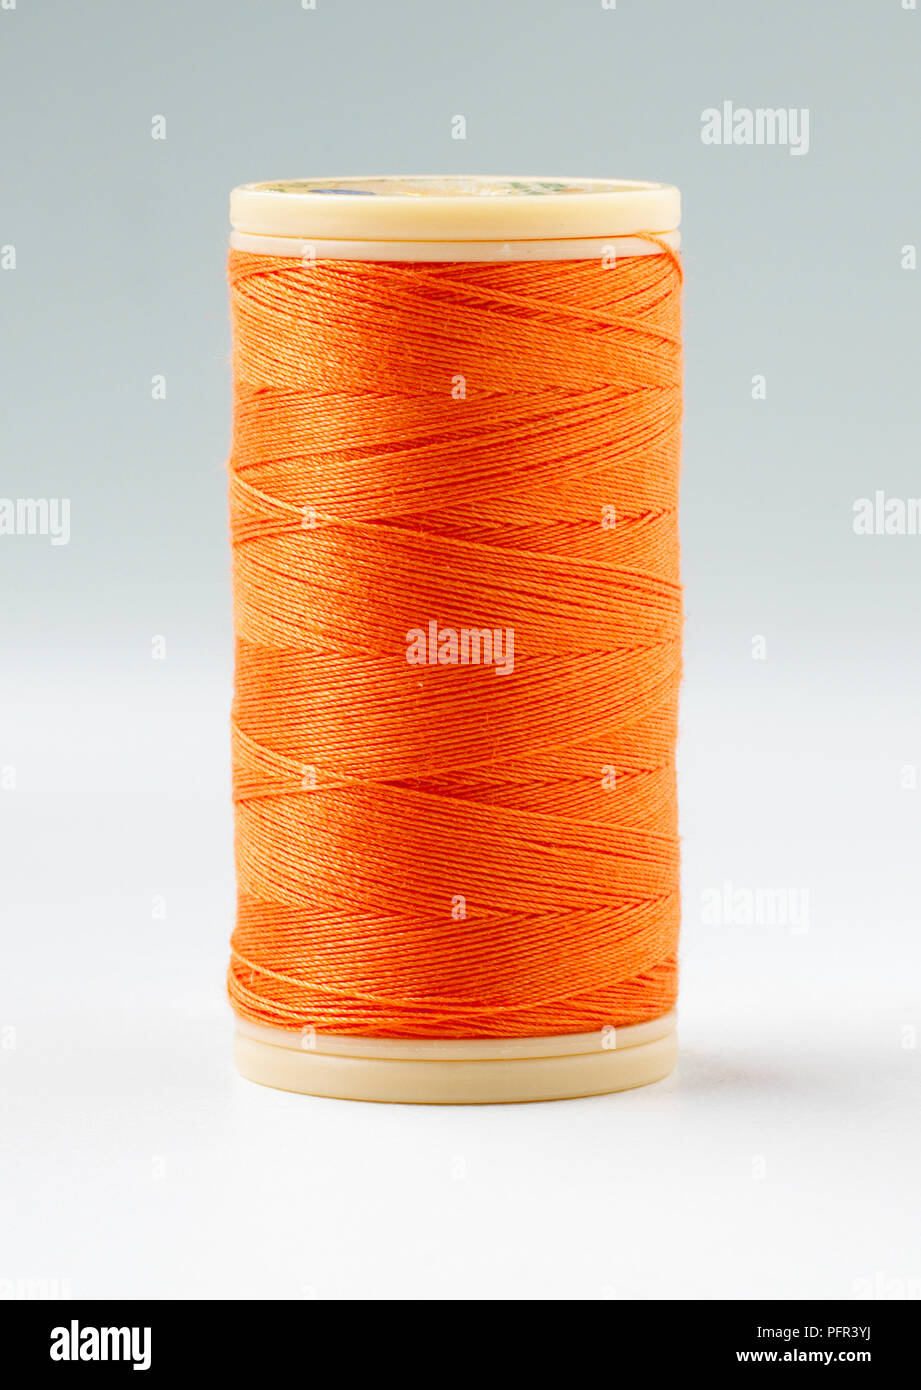 Reel of bright orange cotton sewing thread Stock Photo